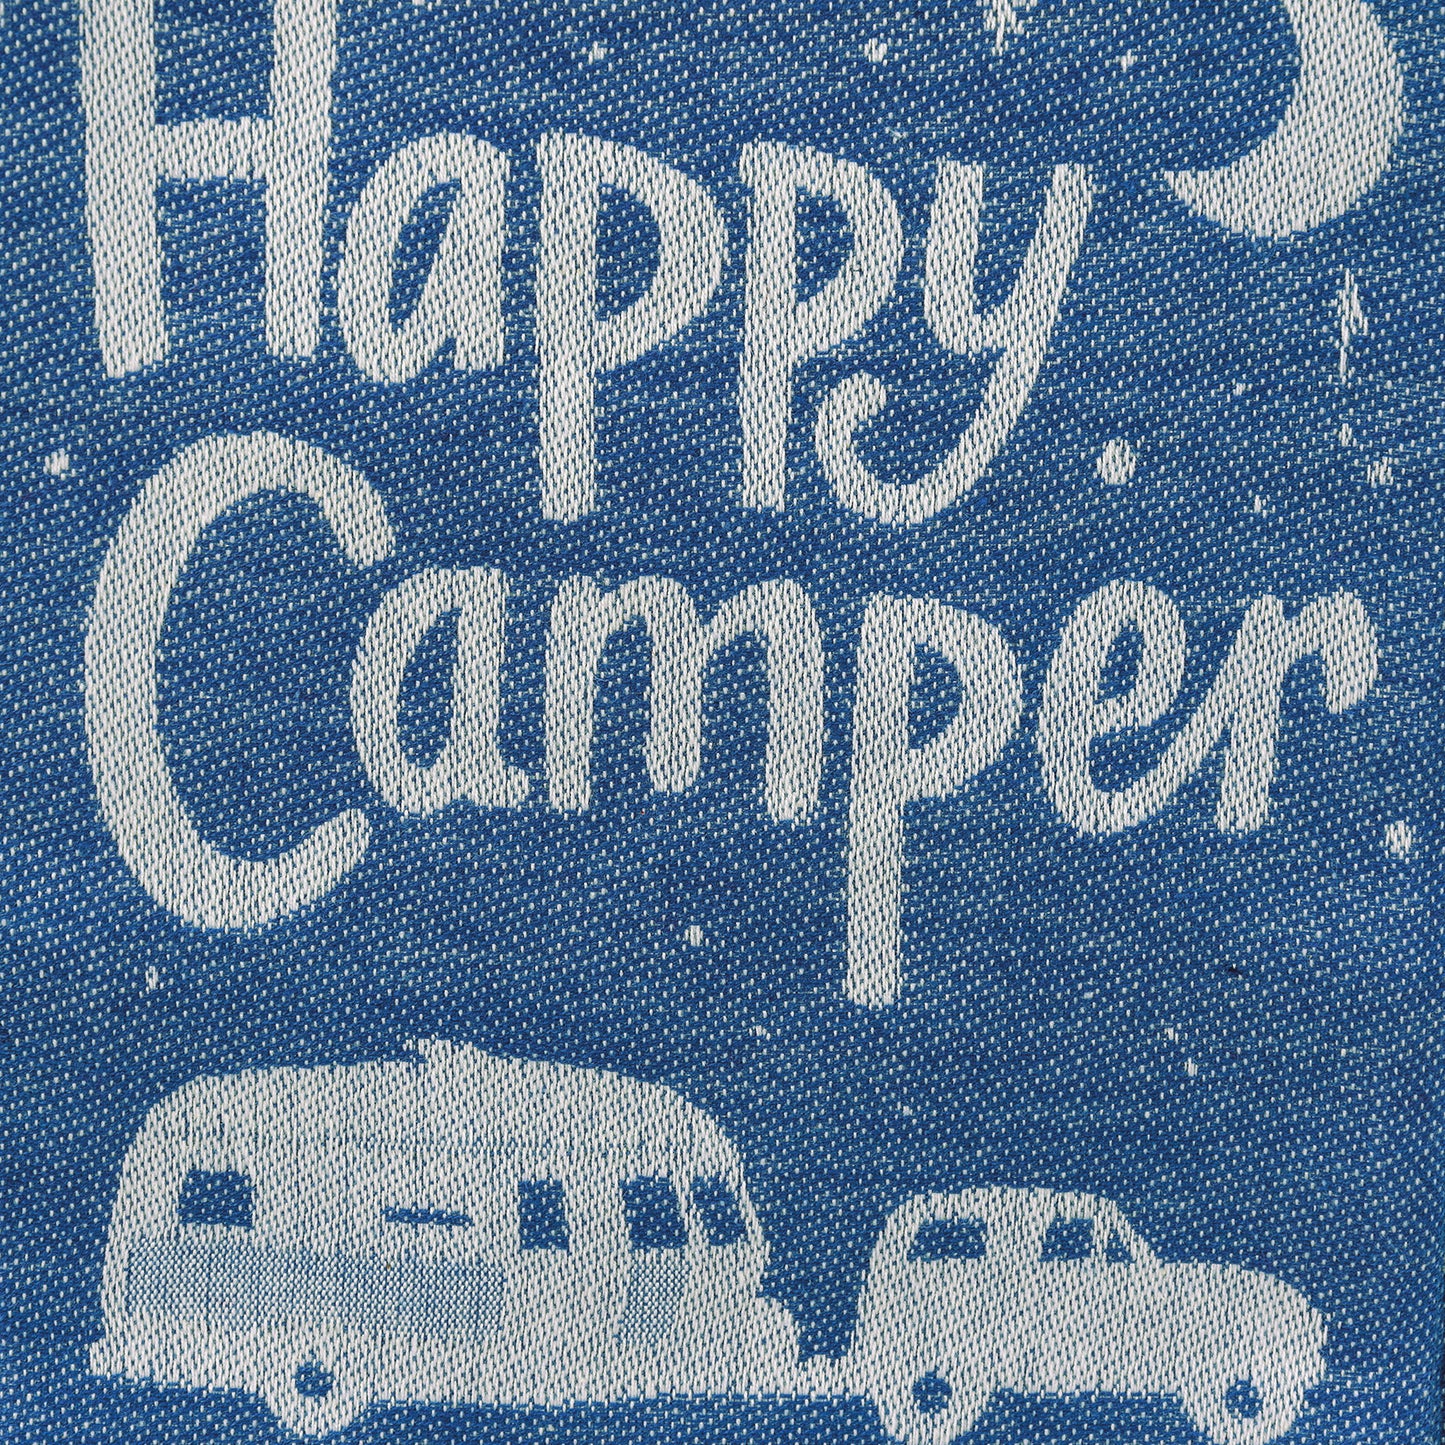 Happy Camper Kitchen Towel